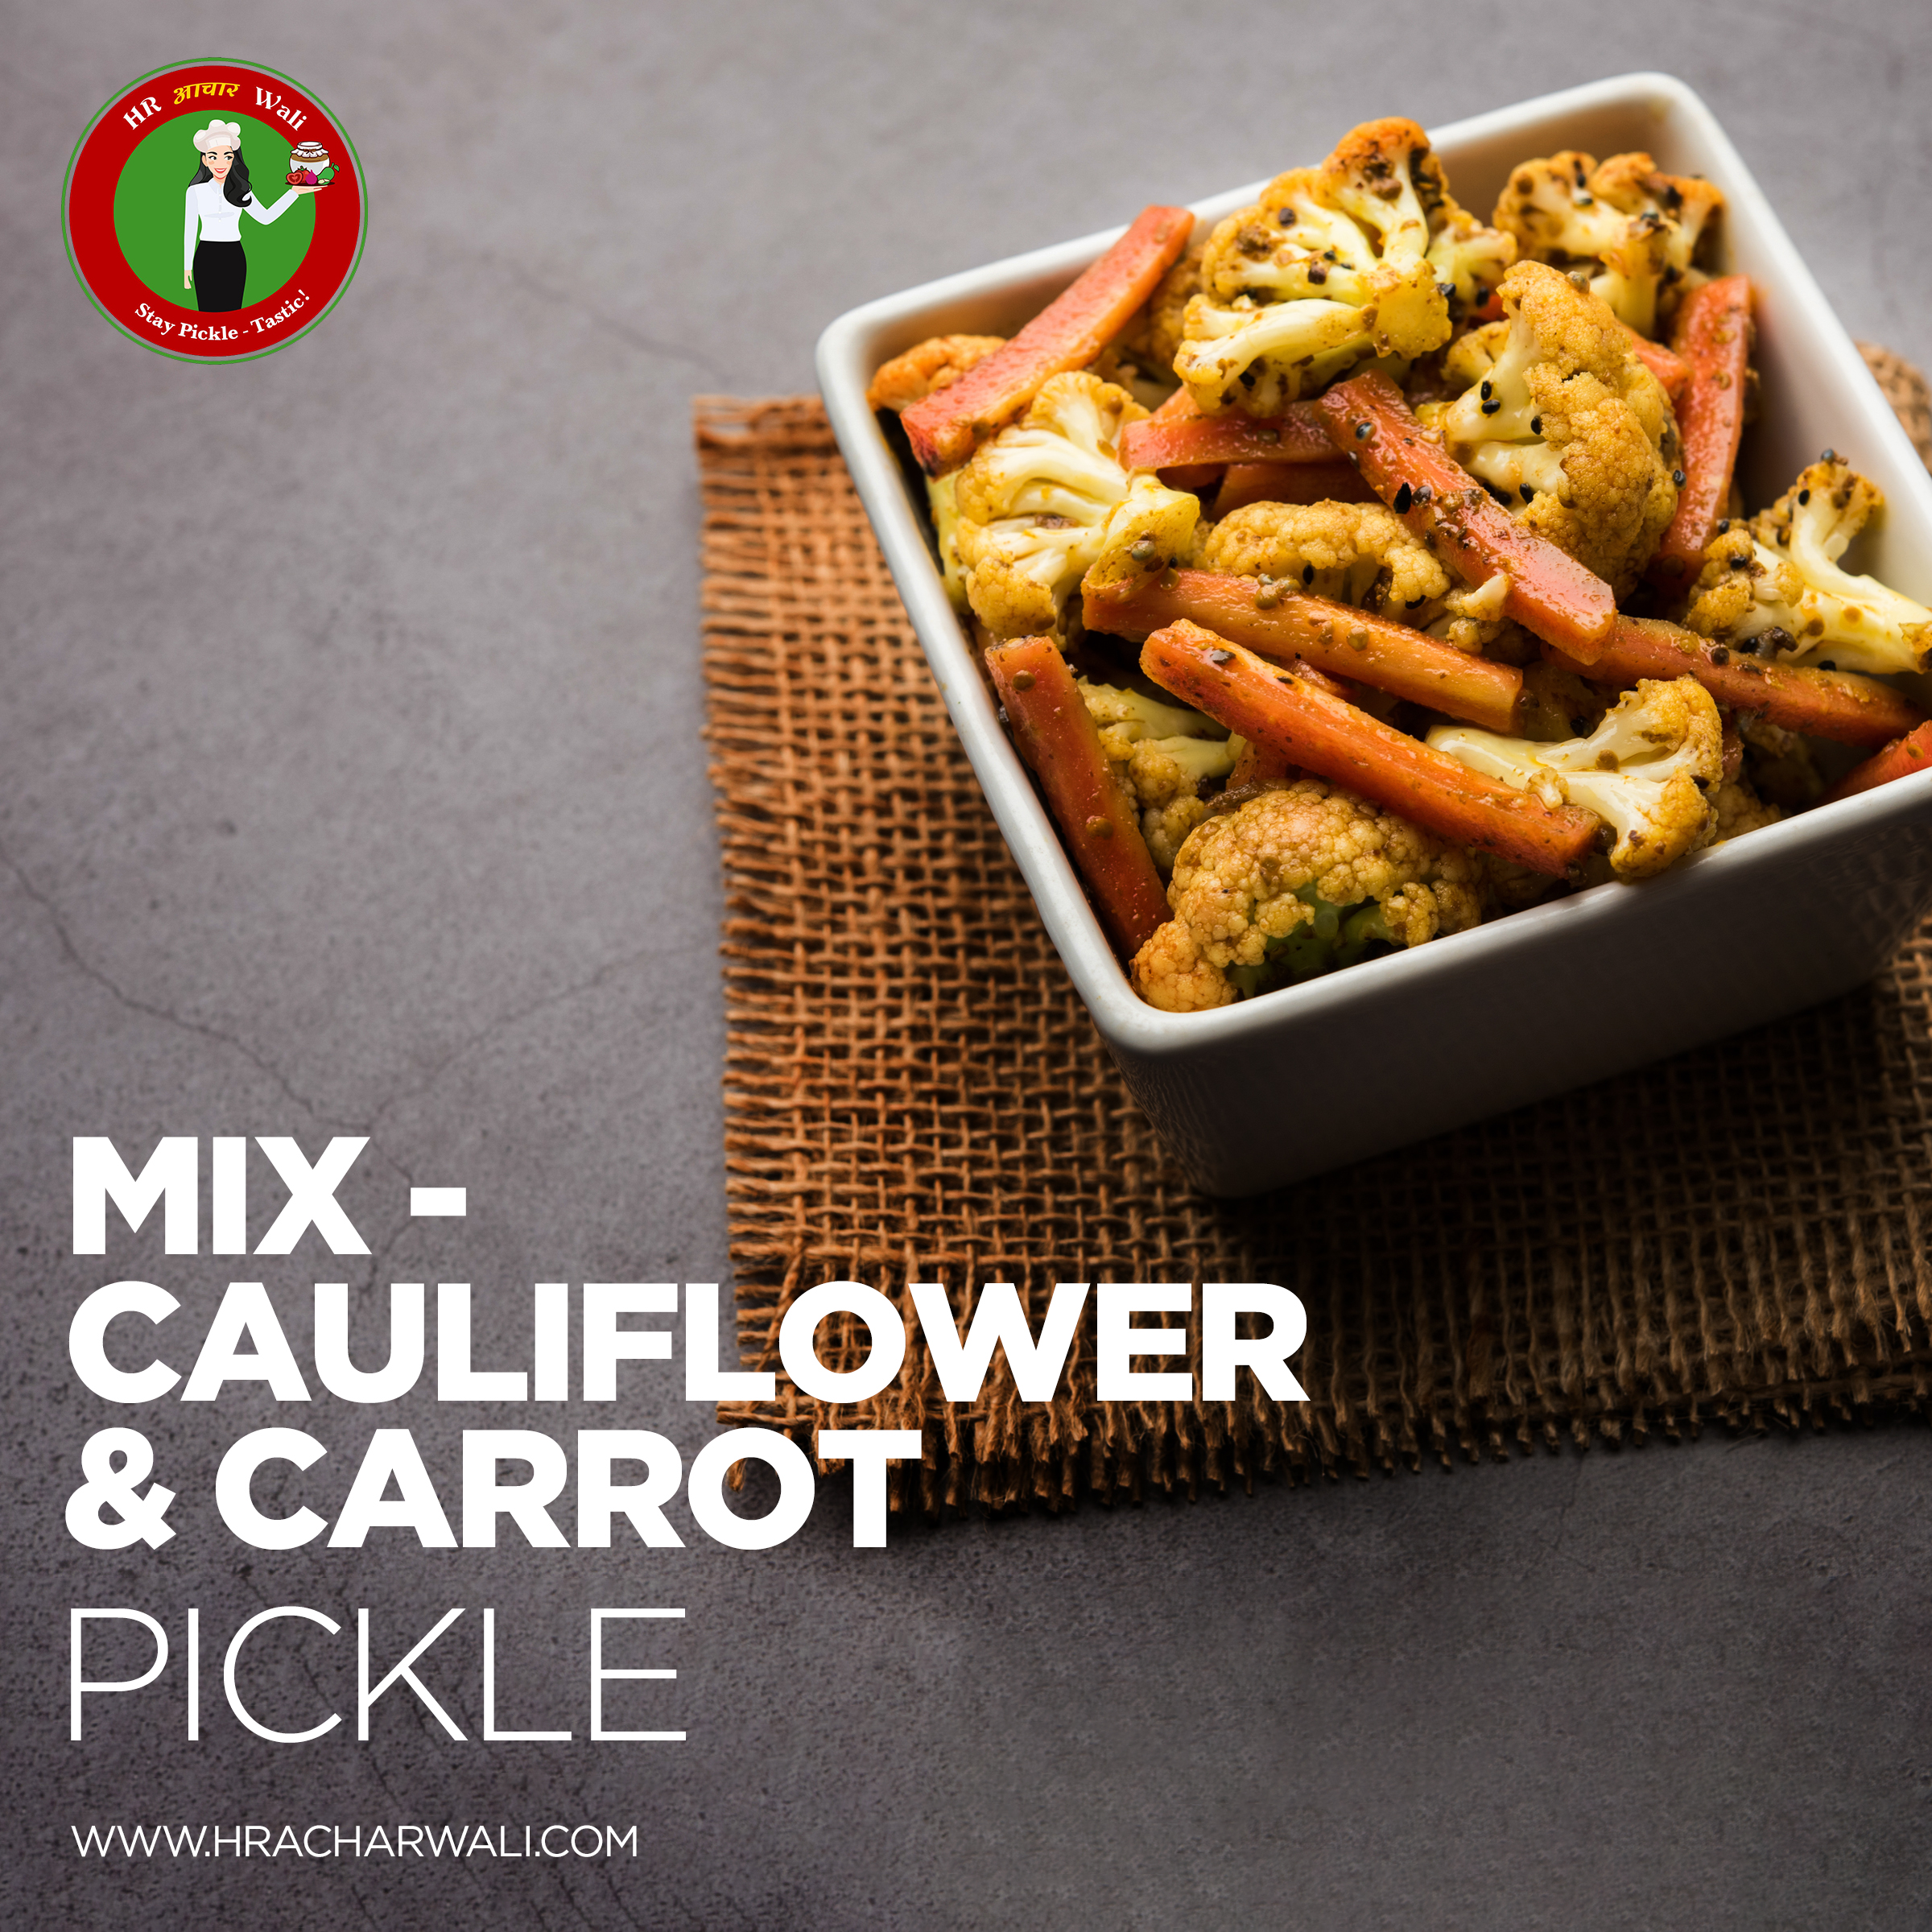 Mix - cauliflower & carrot Pickle